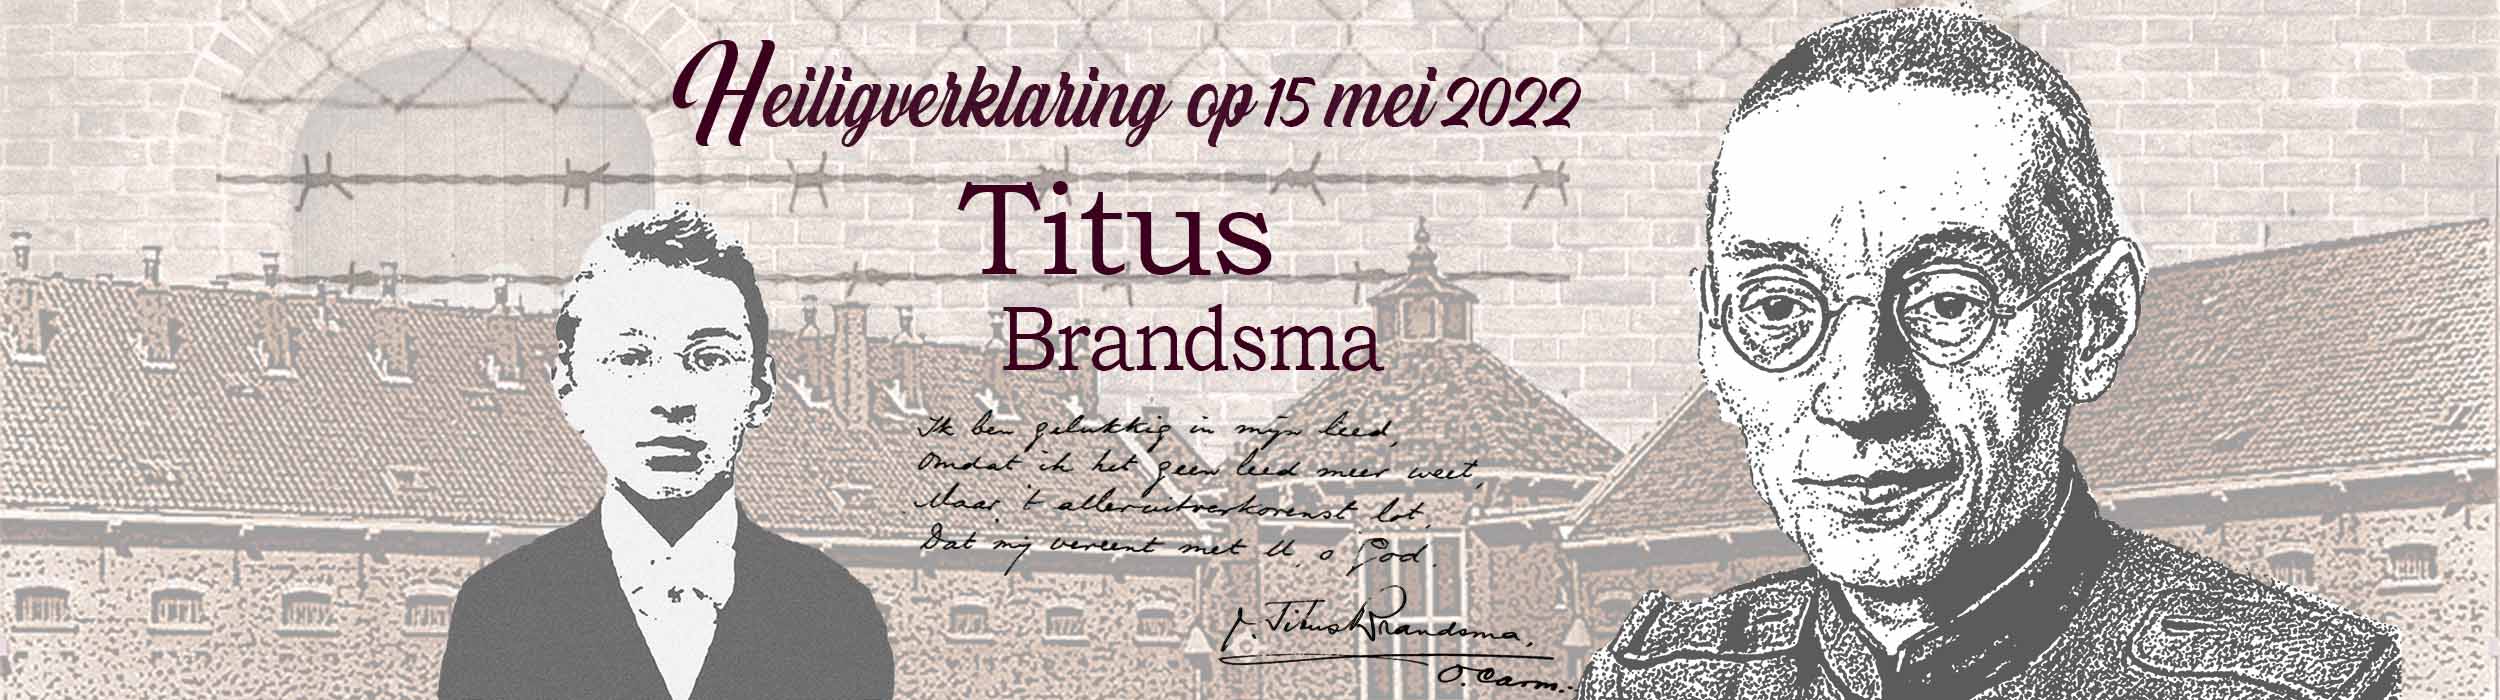 aankondiging Heiligverklaring Titus Brandsma op 15 mei 2022